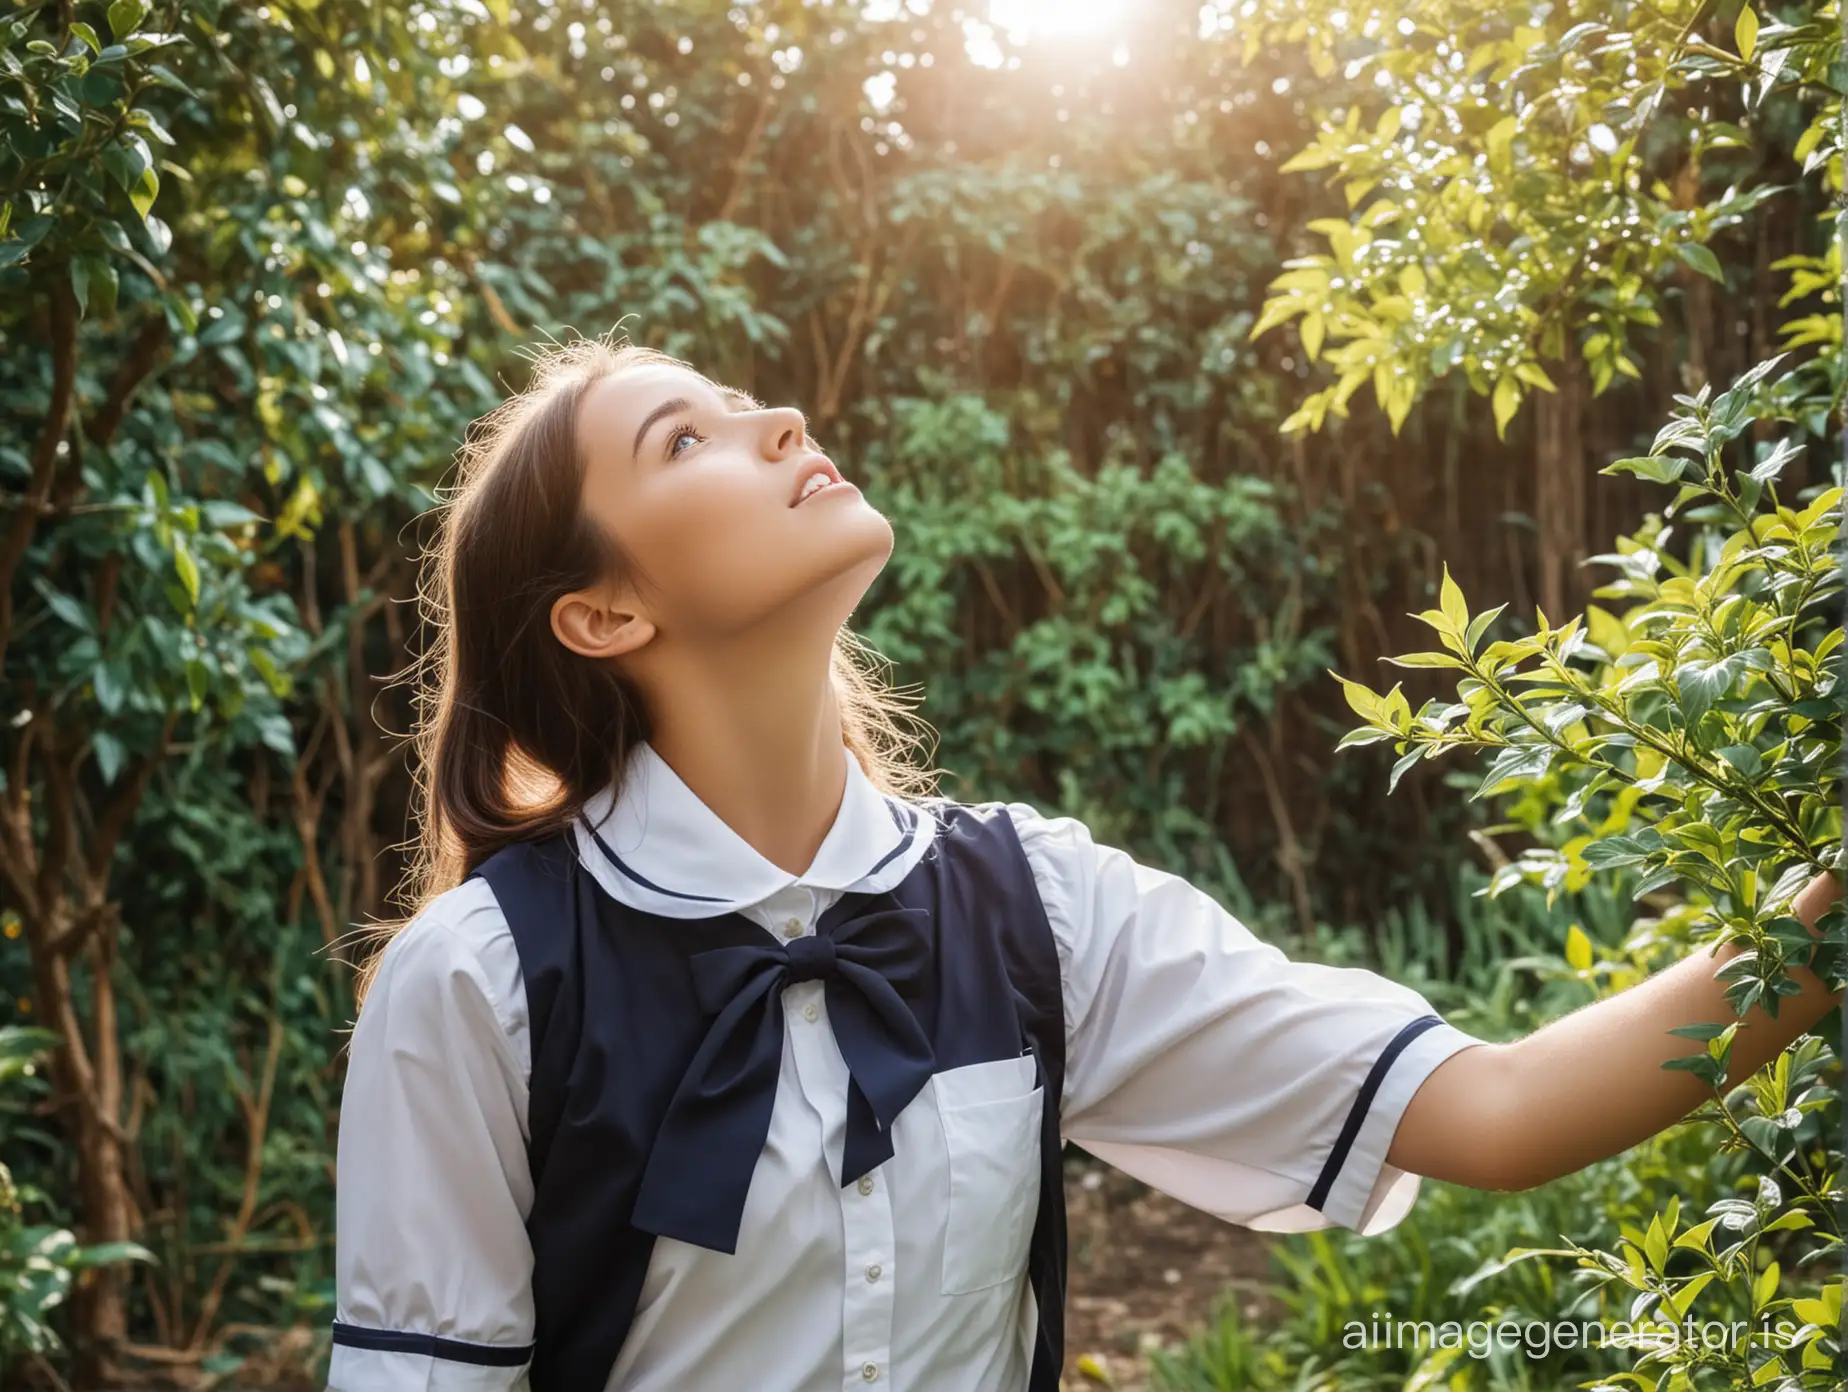 stunningly beautiful girl, looking up to the sky, wearing school uniform, in the garden